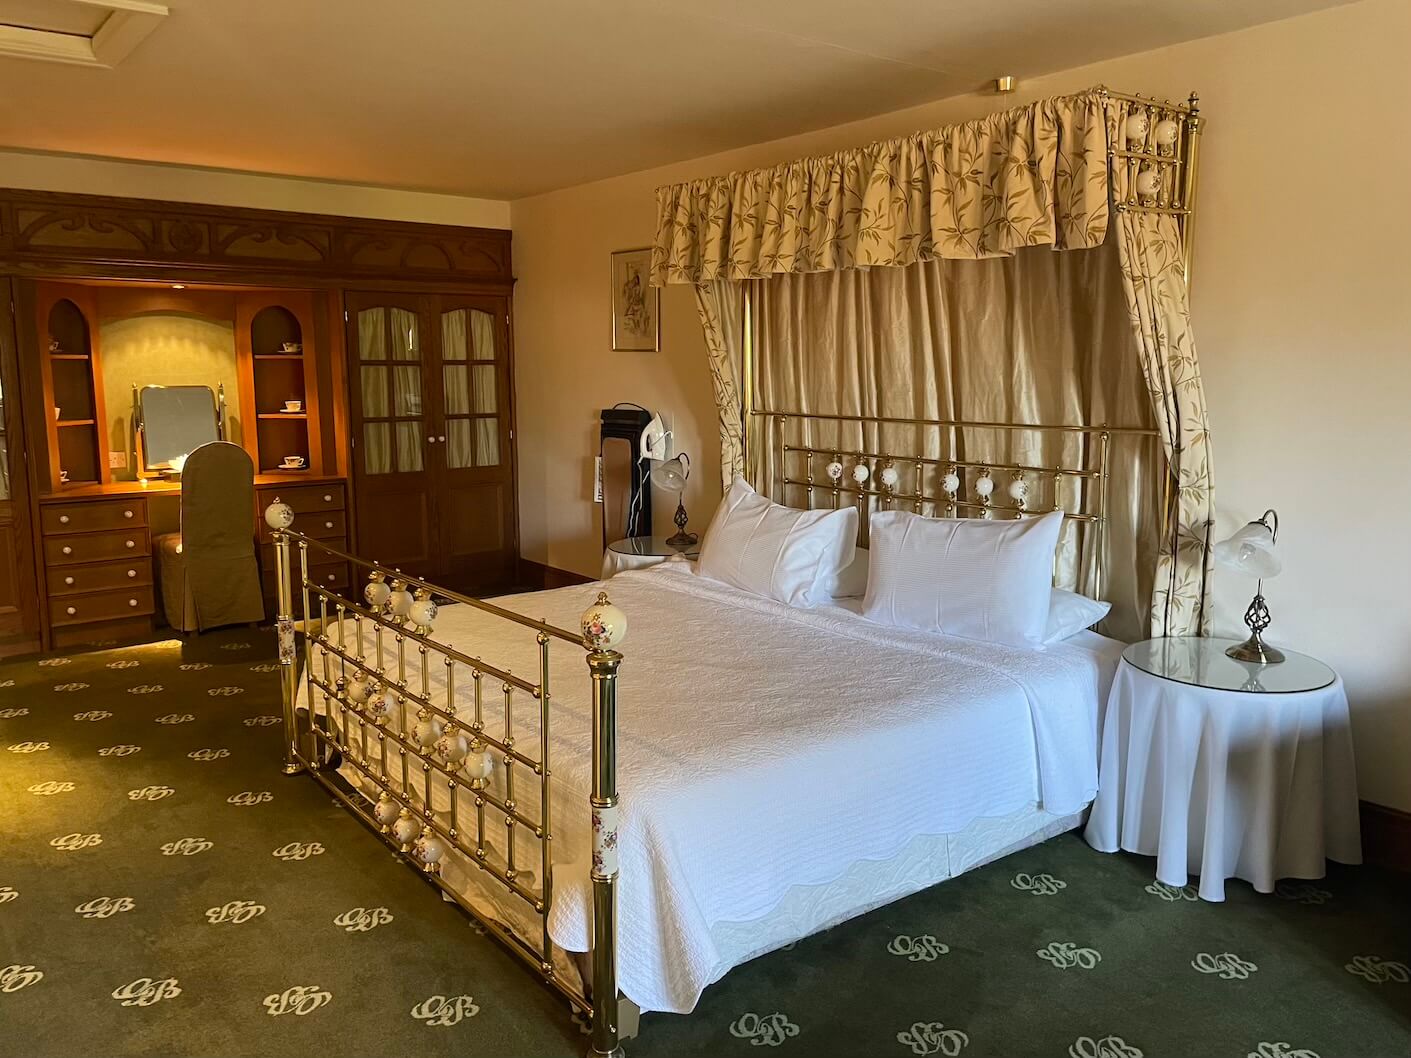 Gibbon Bridge hotel review old style bedroom